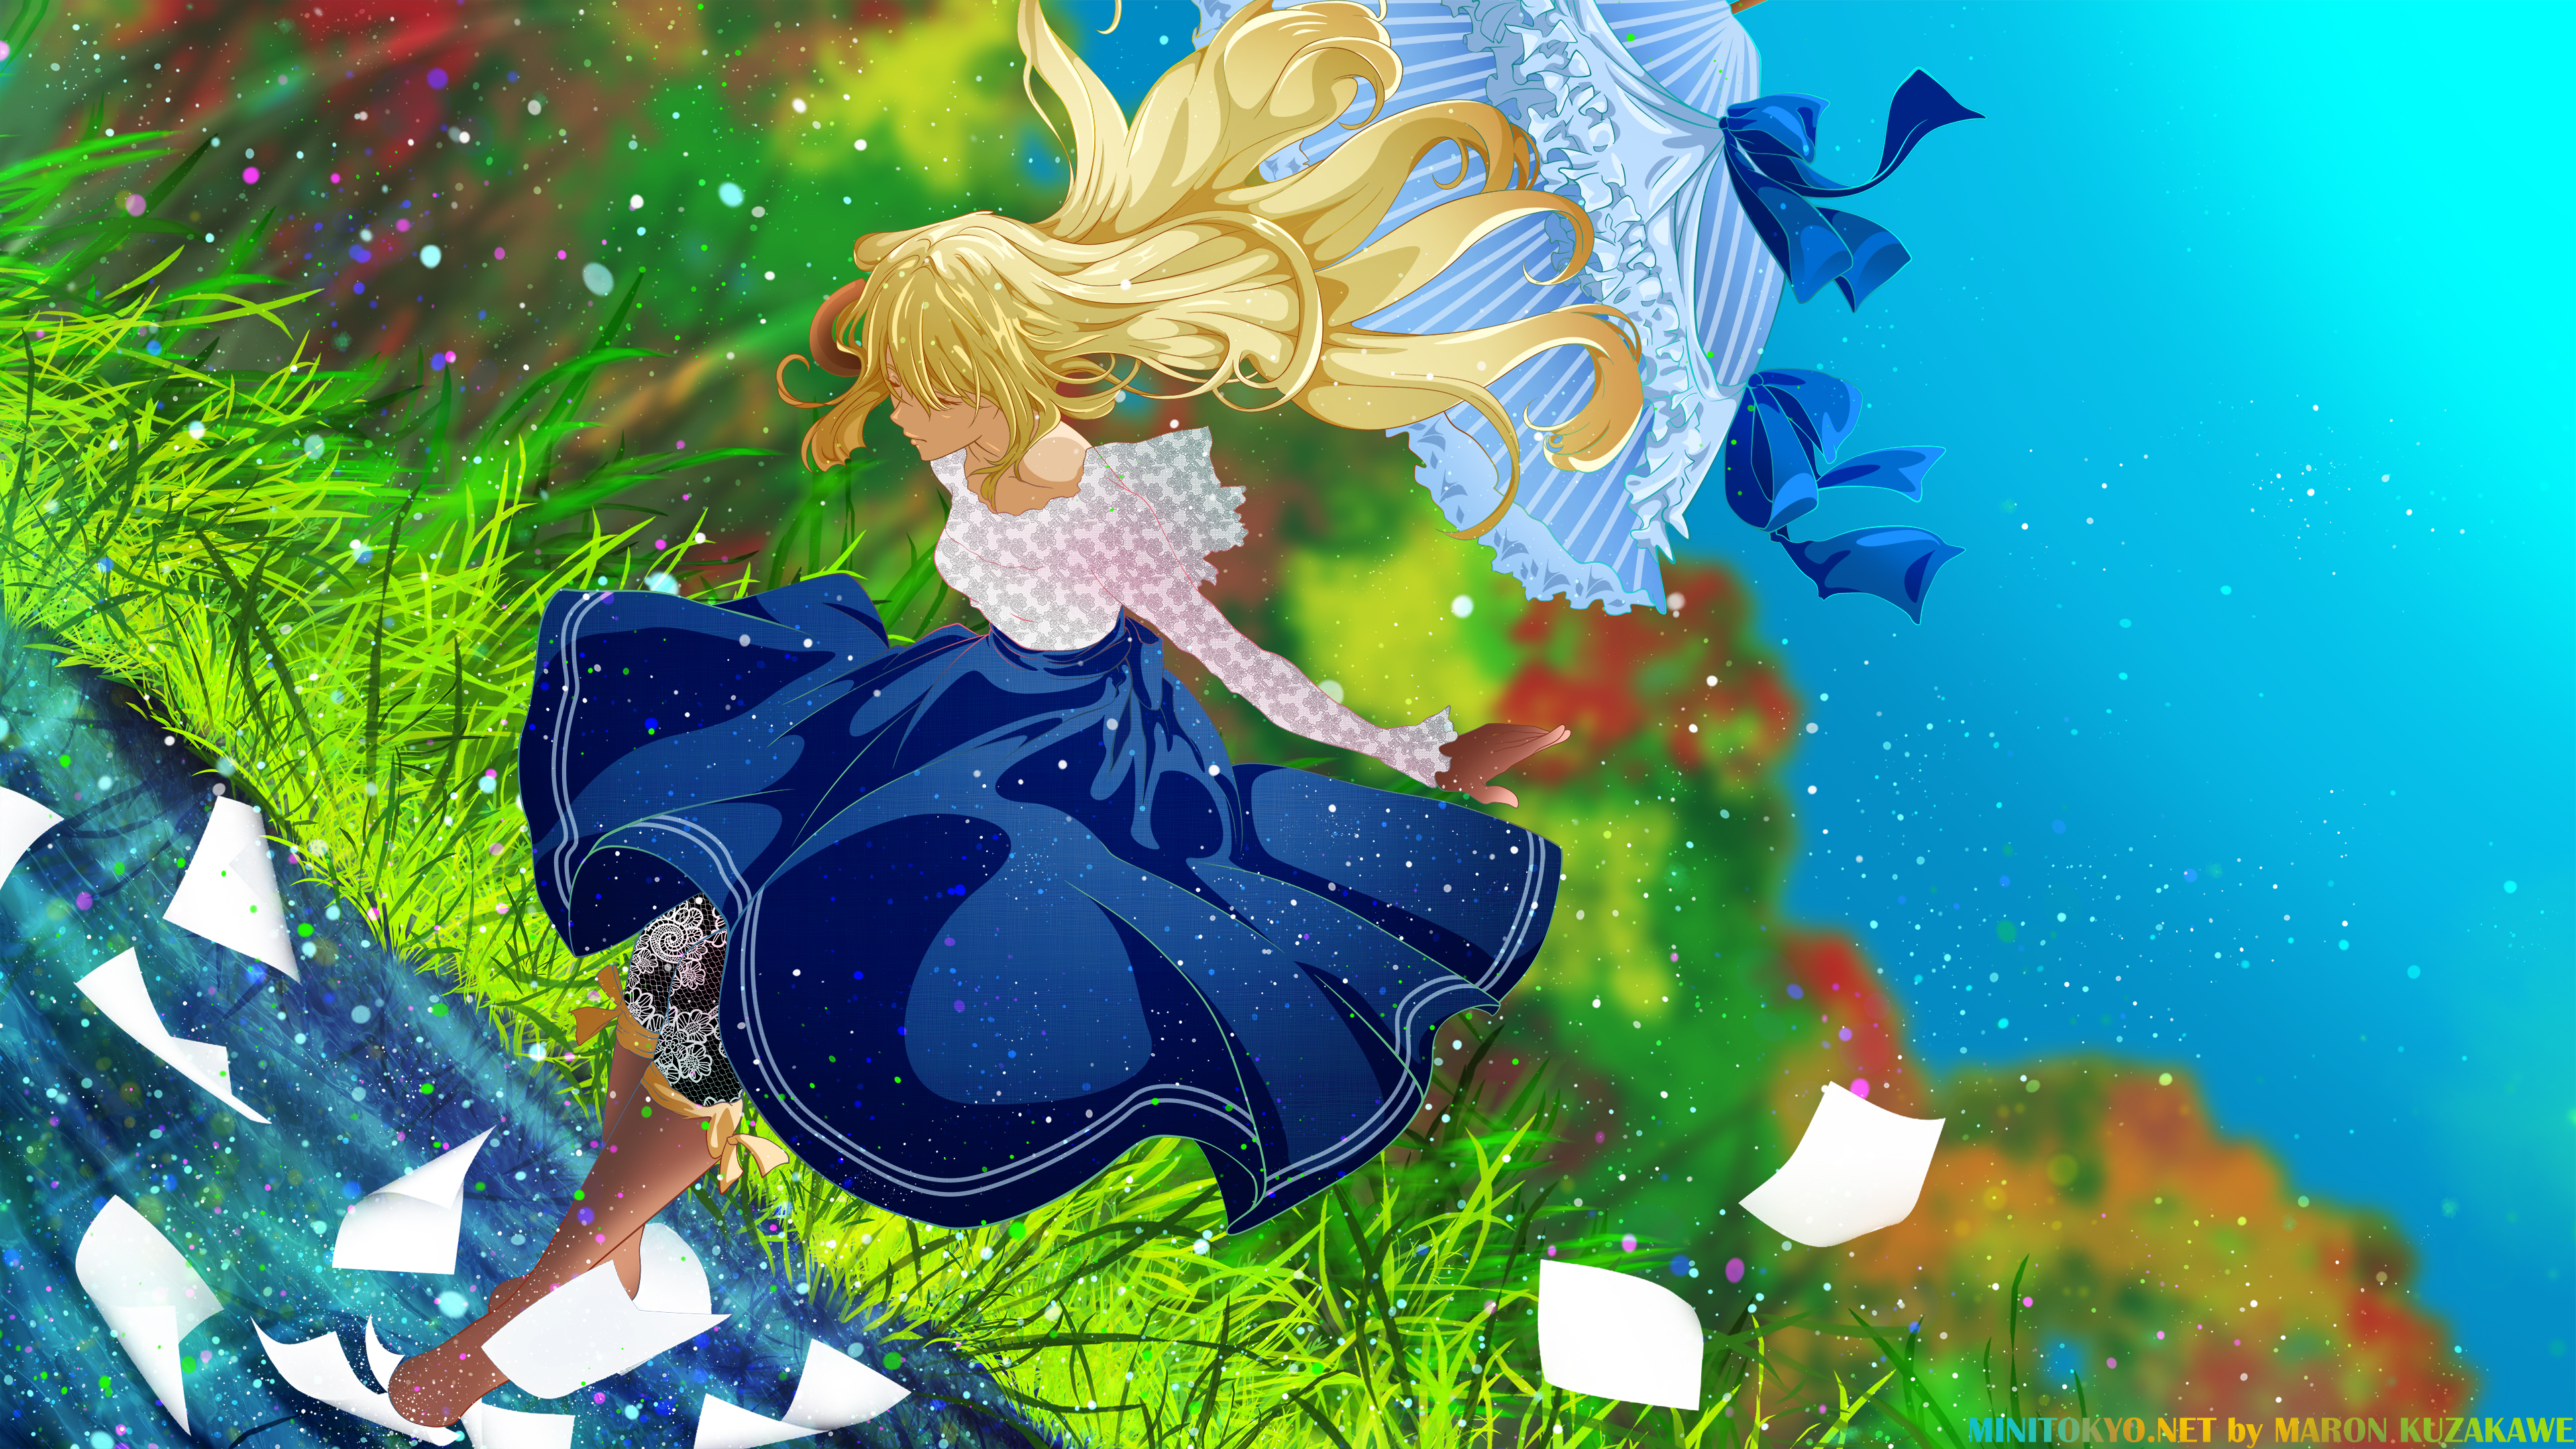 Descarga gratuita de fondo de pantalla para móvil de Animado, Violeta Evergarden (Personaje), Violet Evergarden.